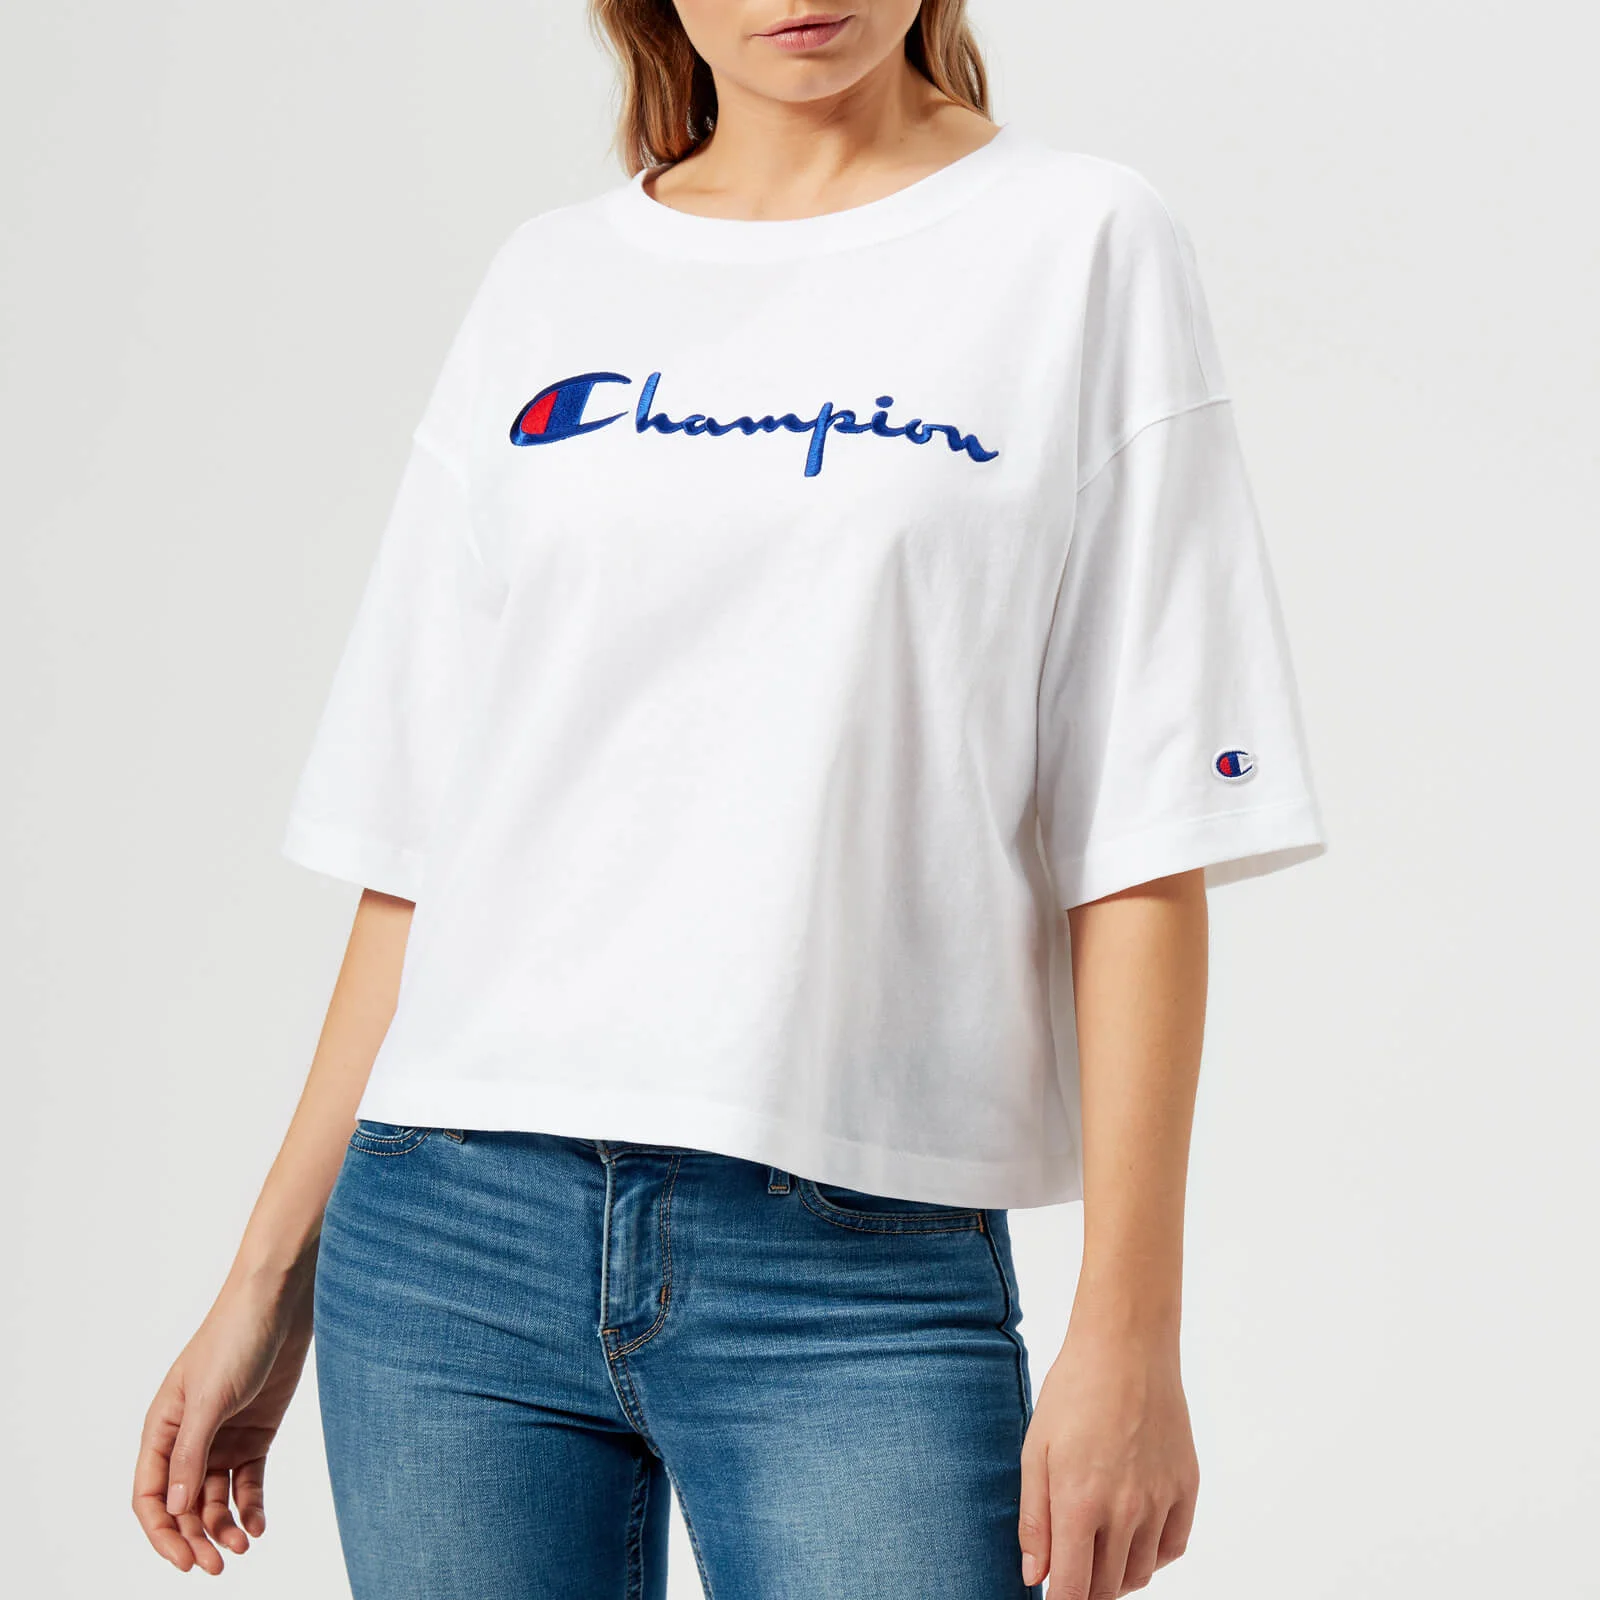 Champion Women's Maxi T-Shirt - White Image 1